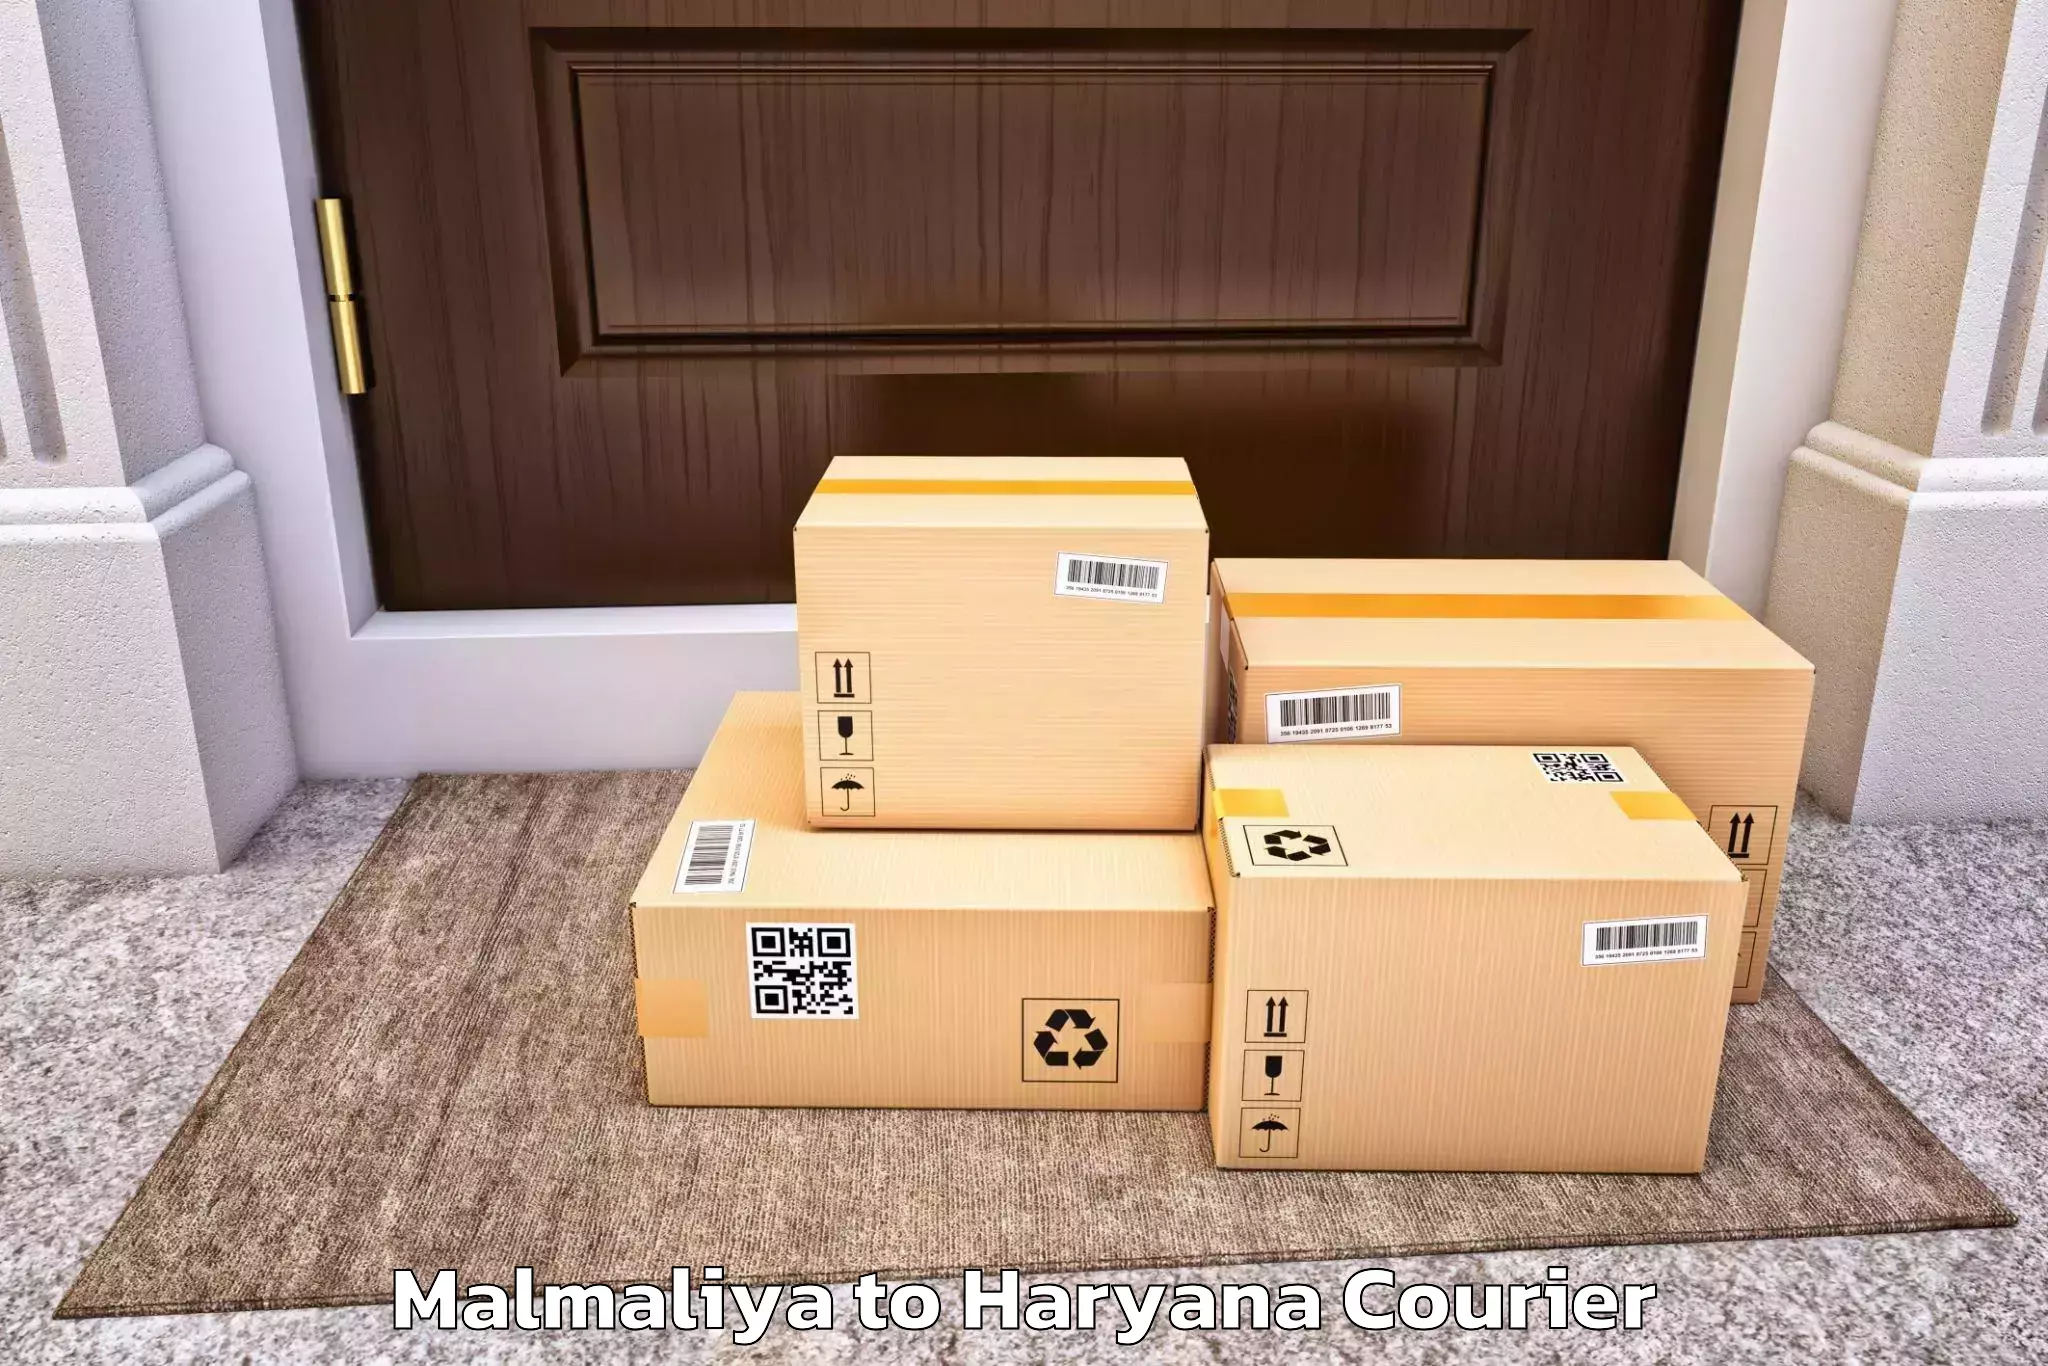 Furniture delivery service in Malmaliya to Narwana